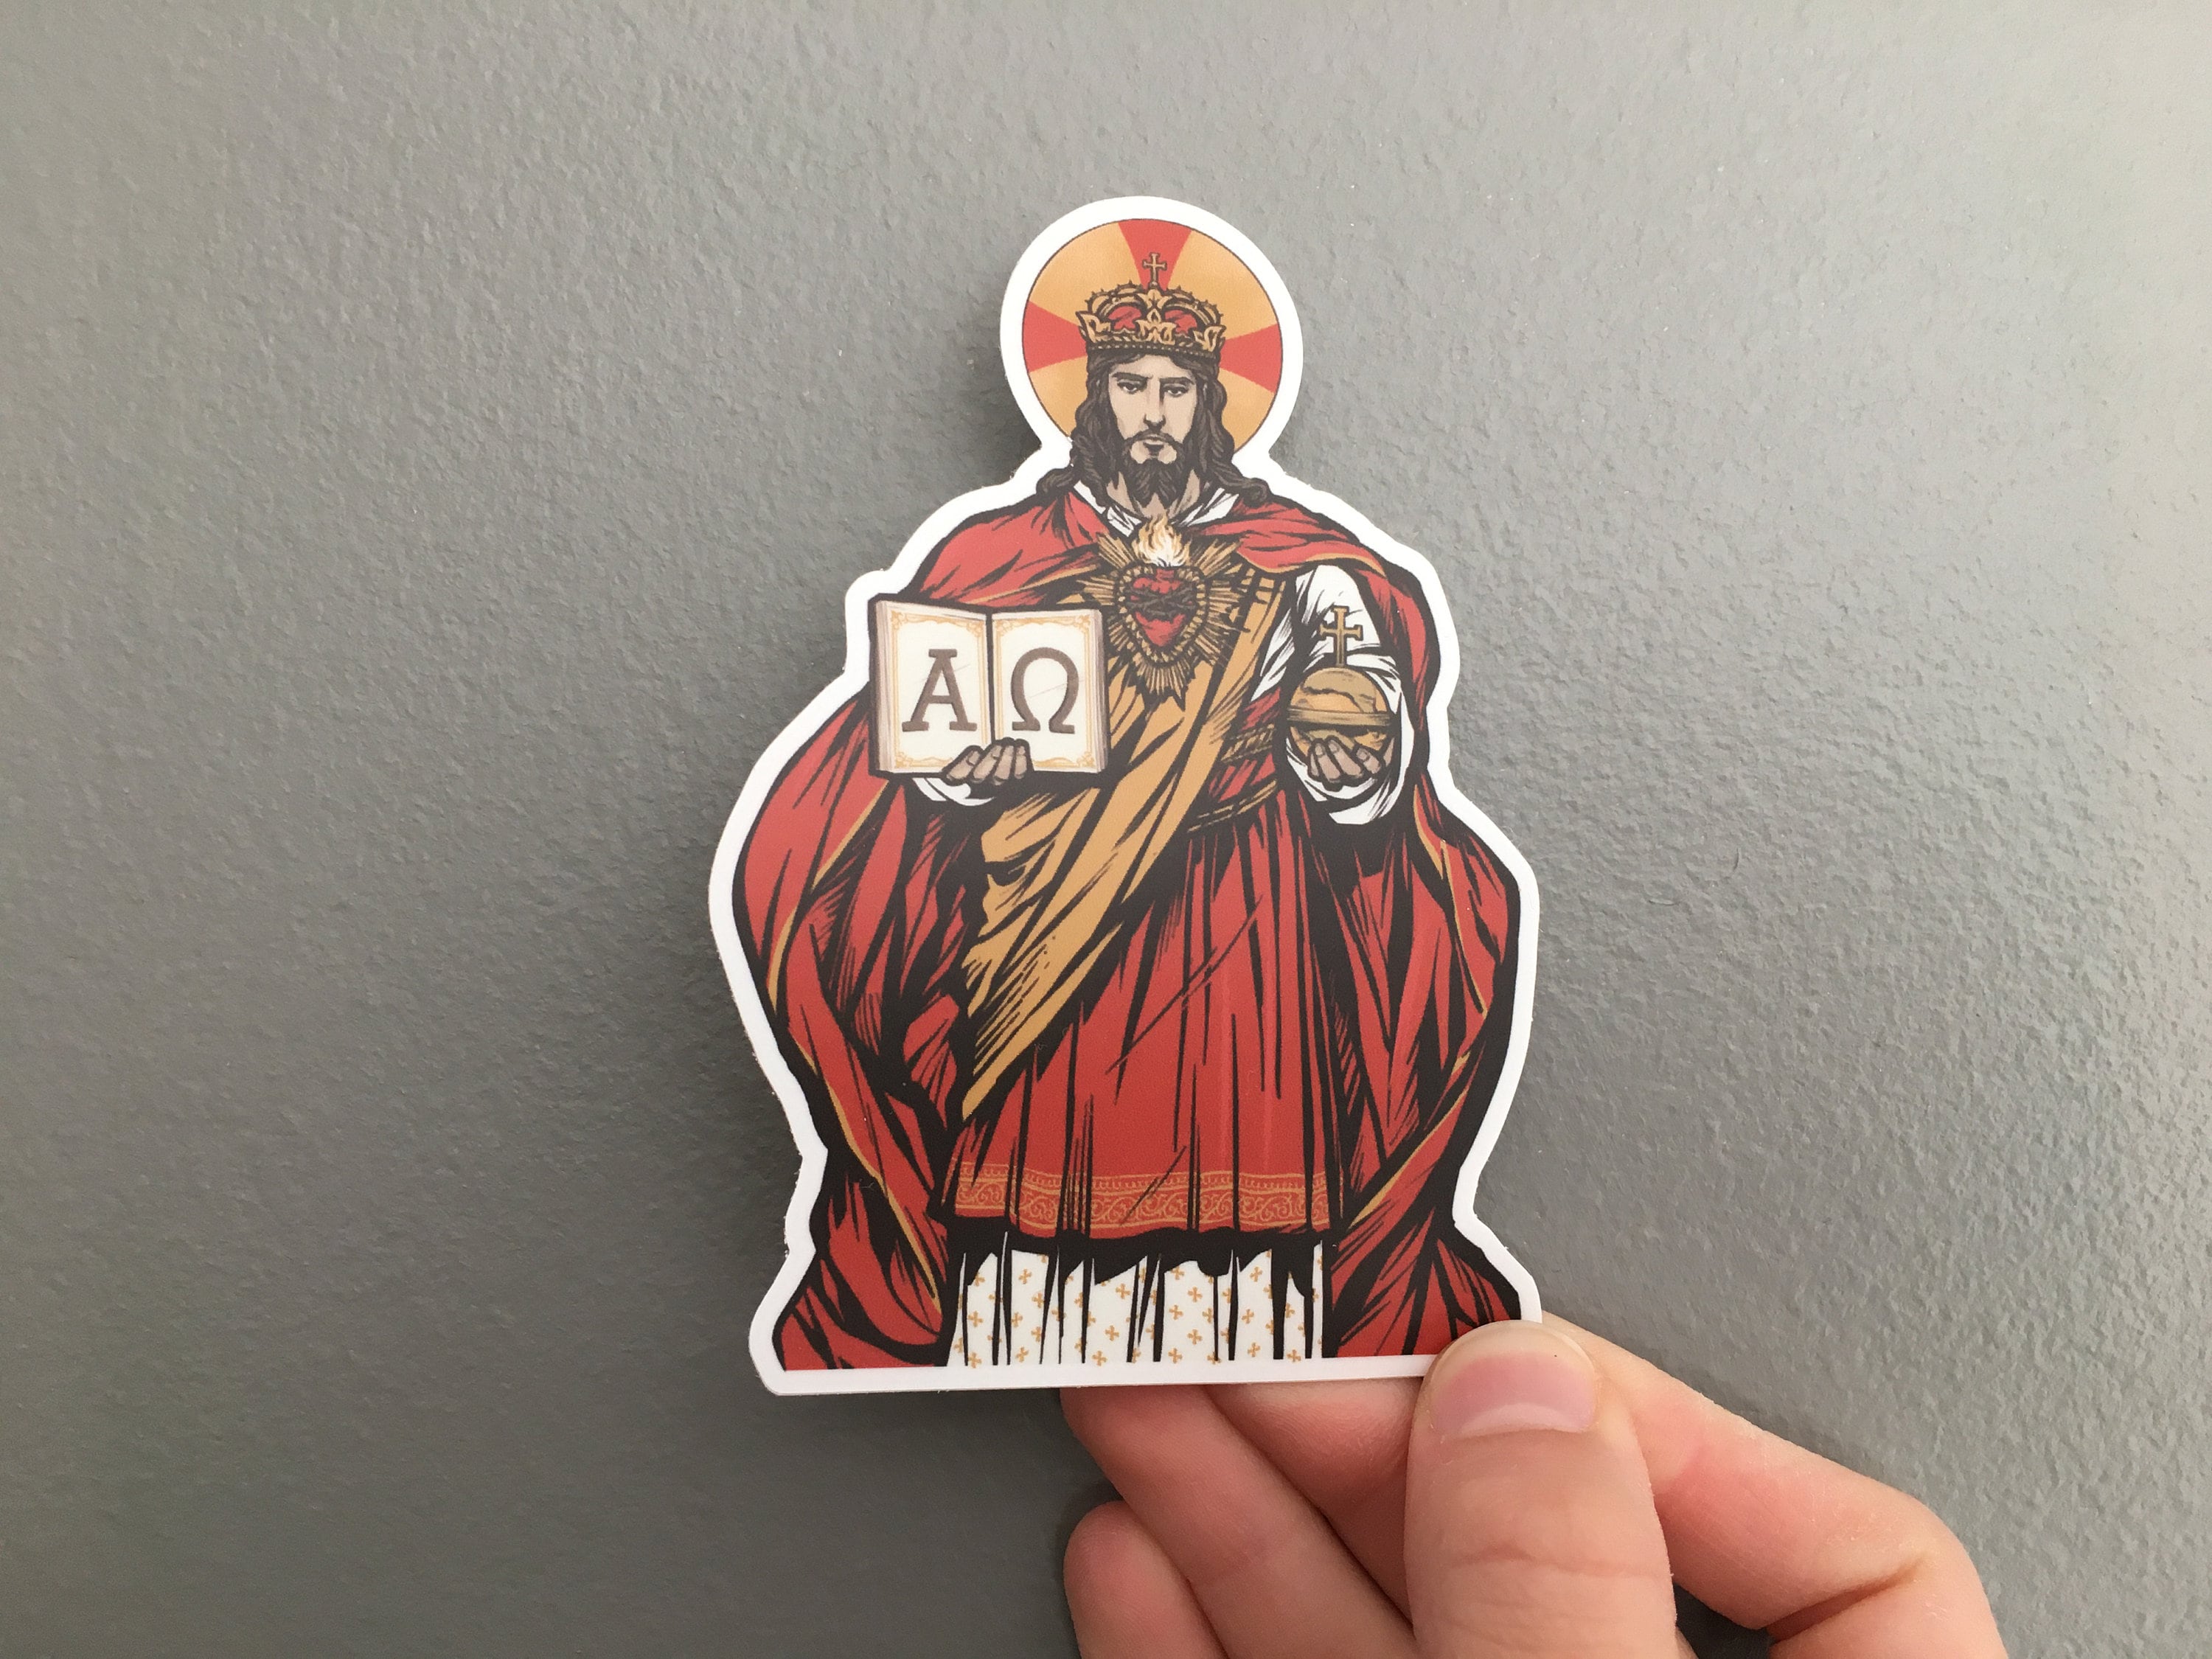 Christ Stickers for Sale - Fine Art America